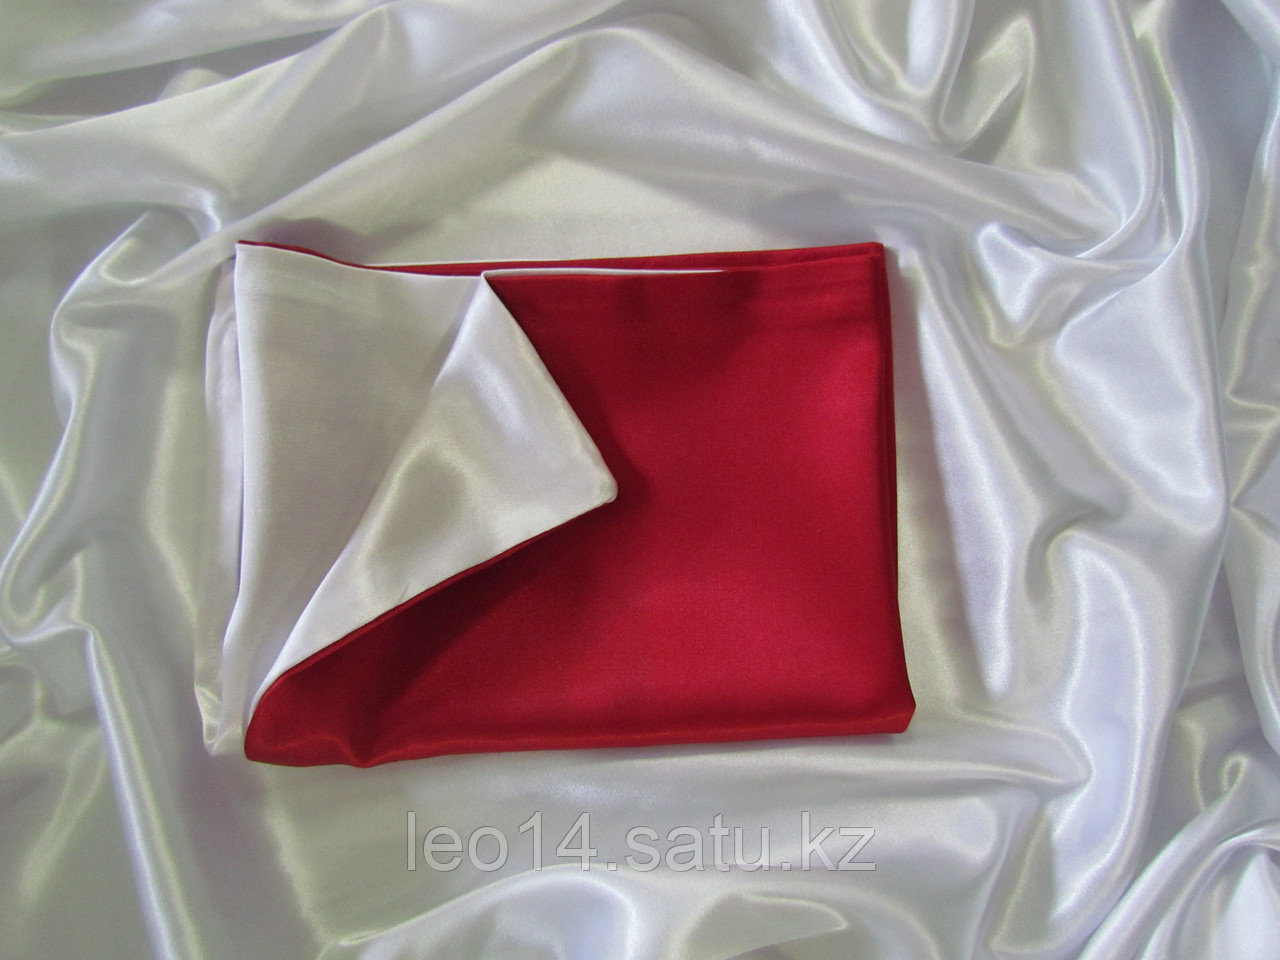 Наволочка двухцветная (бело-красная) для сублимации, 30х40 см, атлас